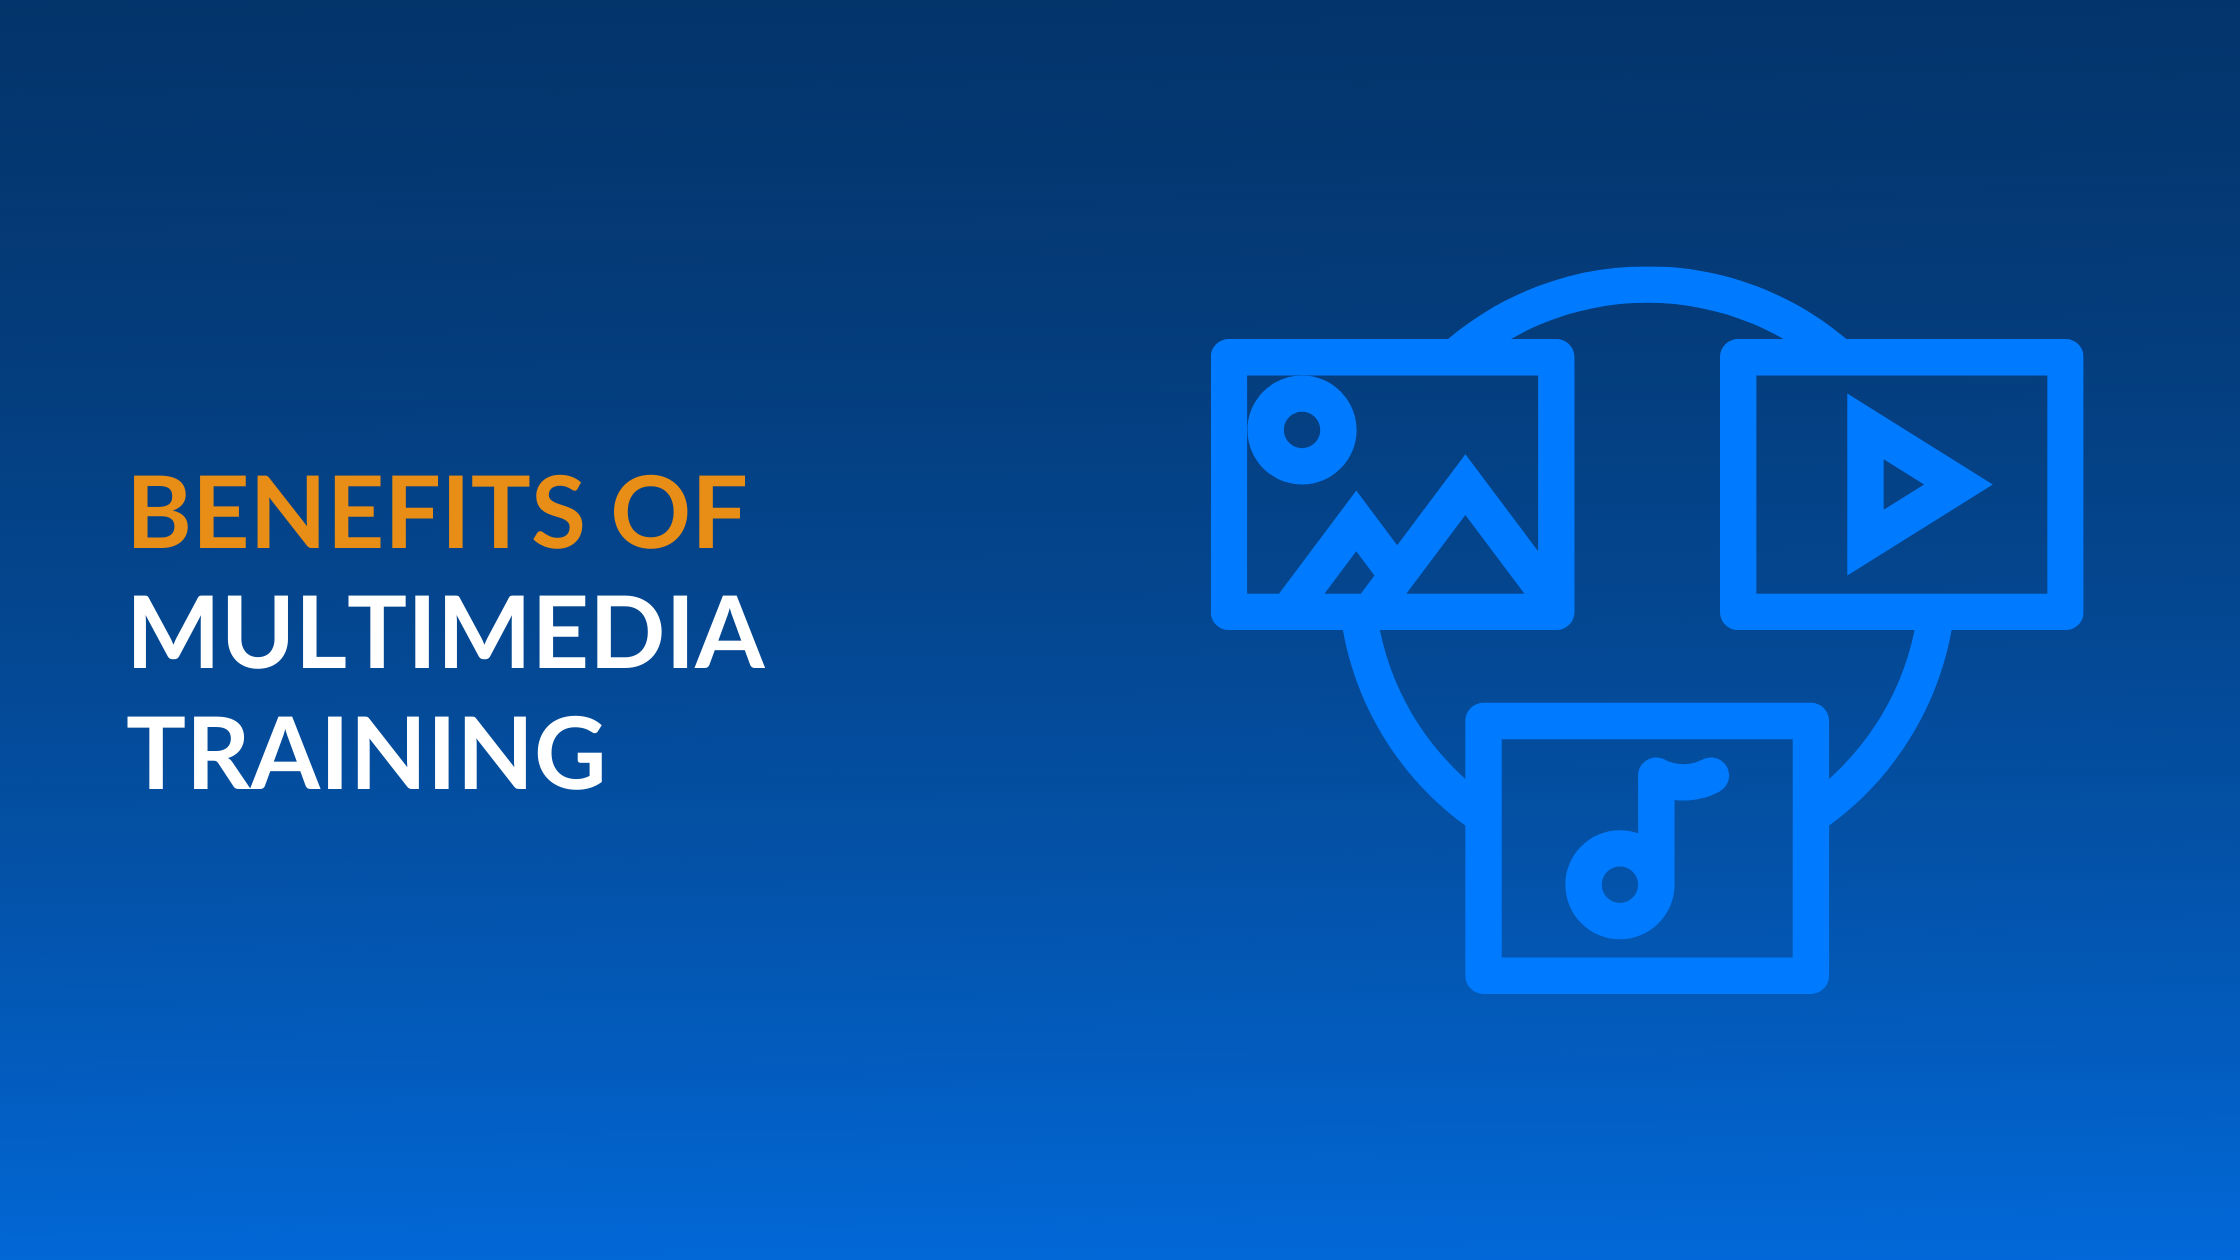 The Benefits of Multimedia Training